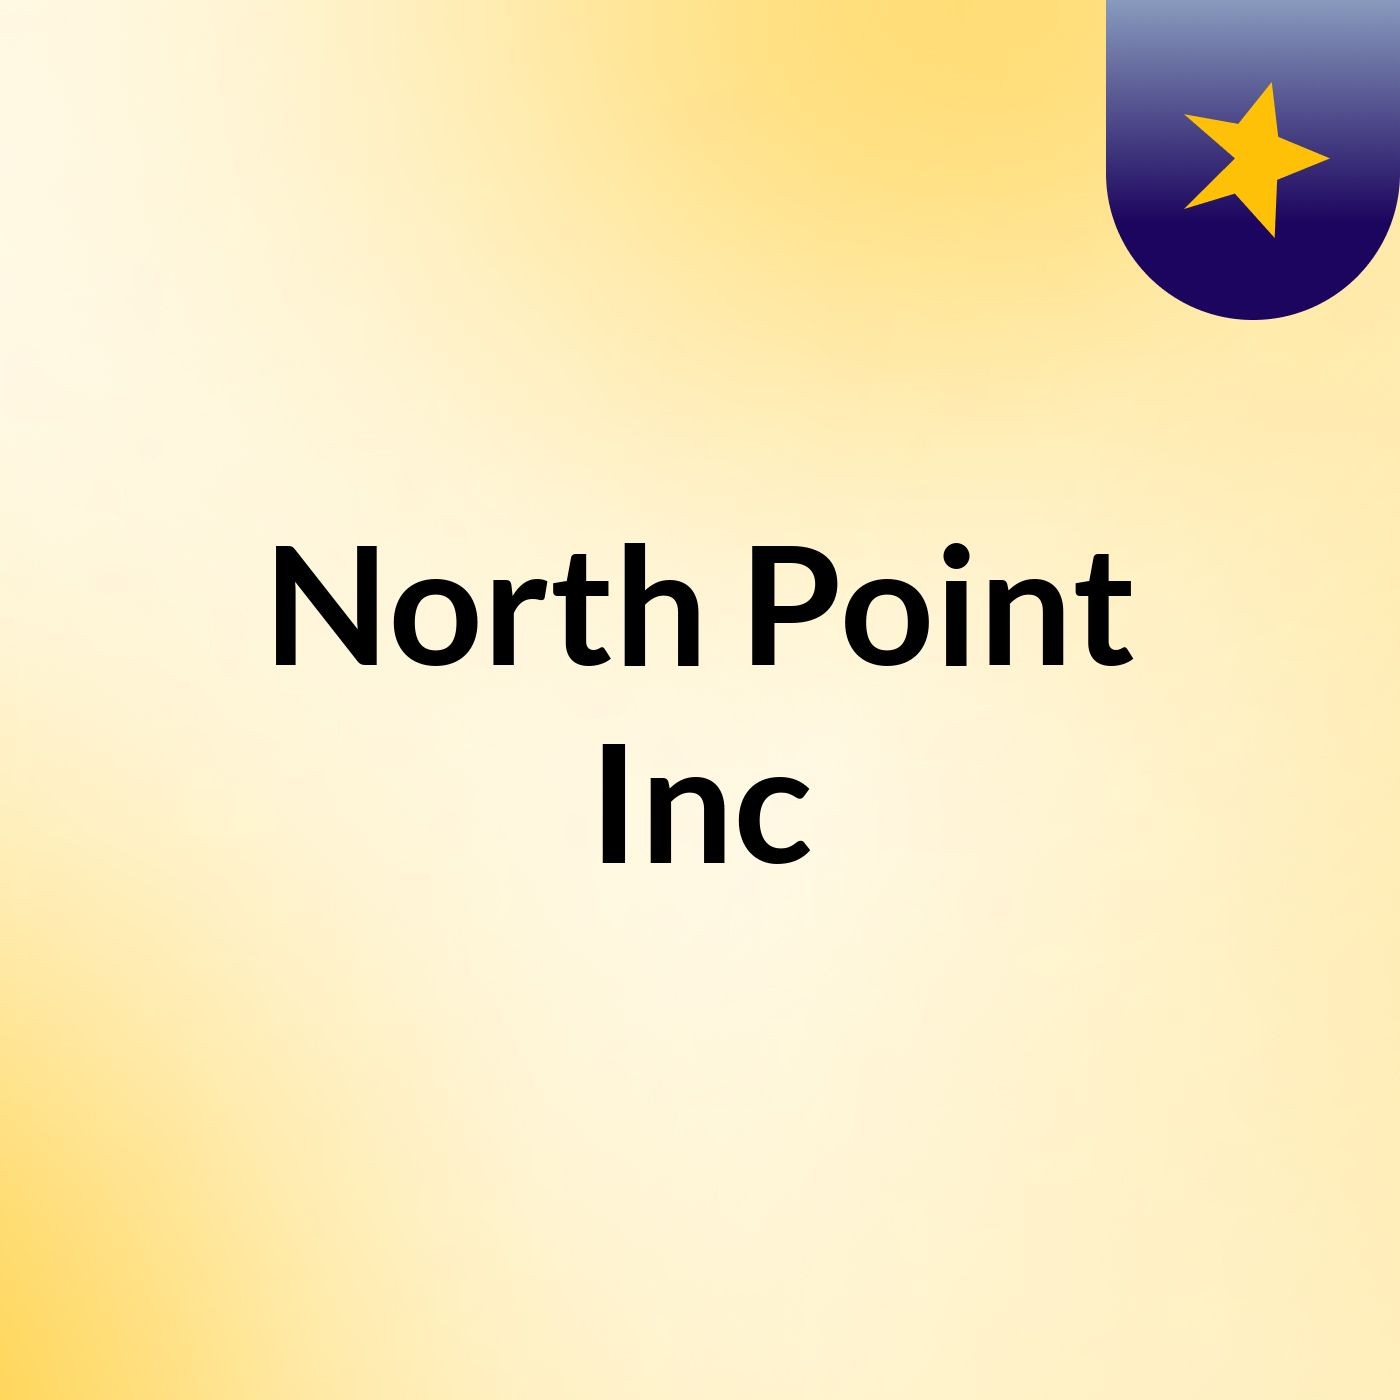 North Point Inc